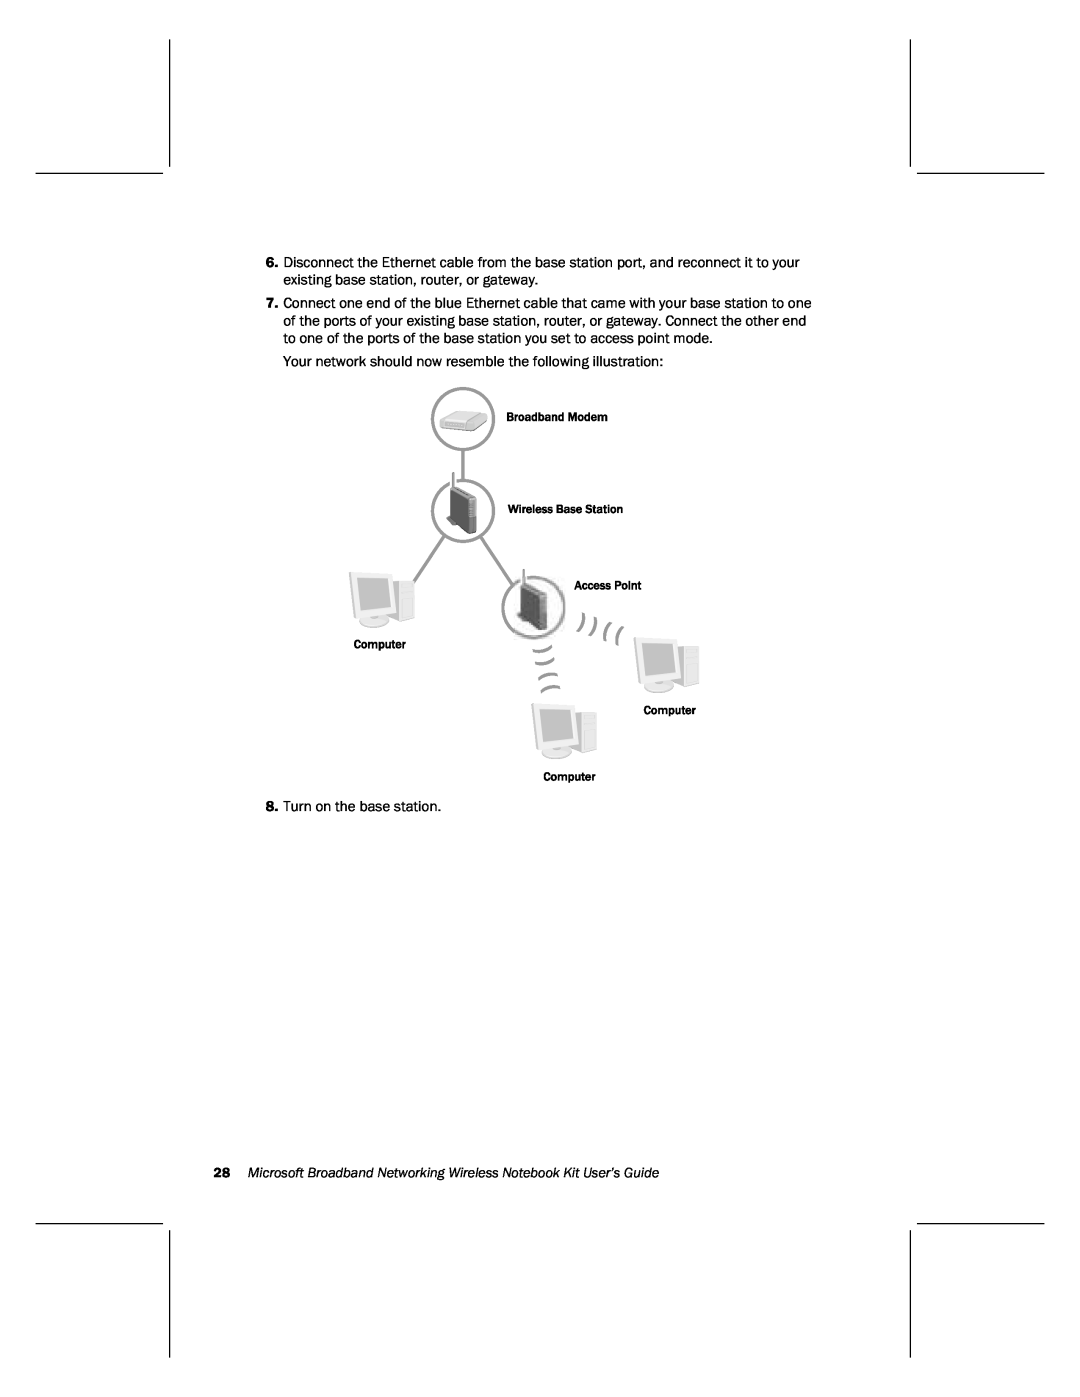 Microsoft MN-820 manual Microsoft Broadband Networking Wireless Notebook Kit User’s Guide 